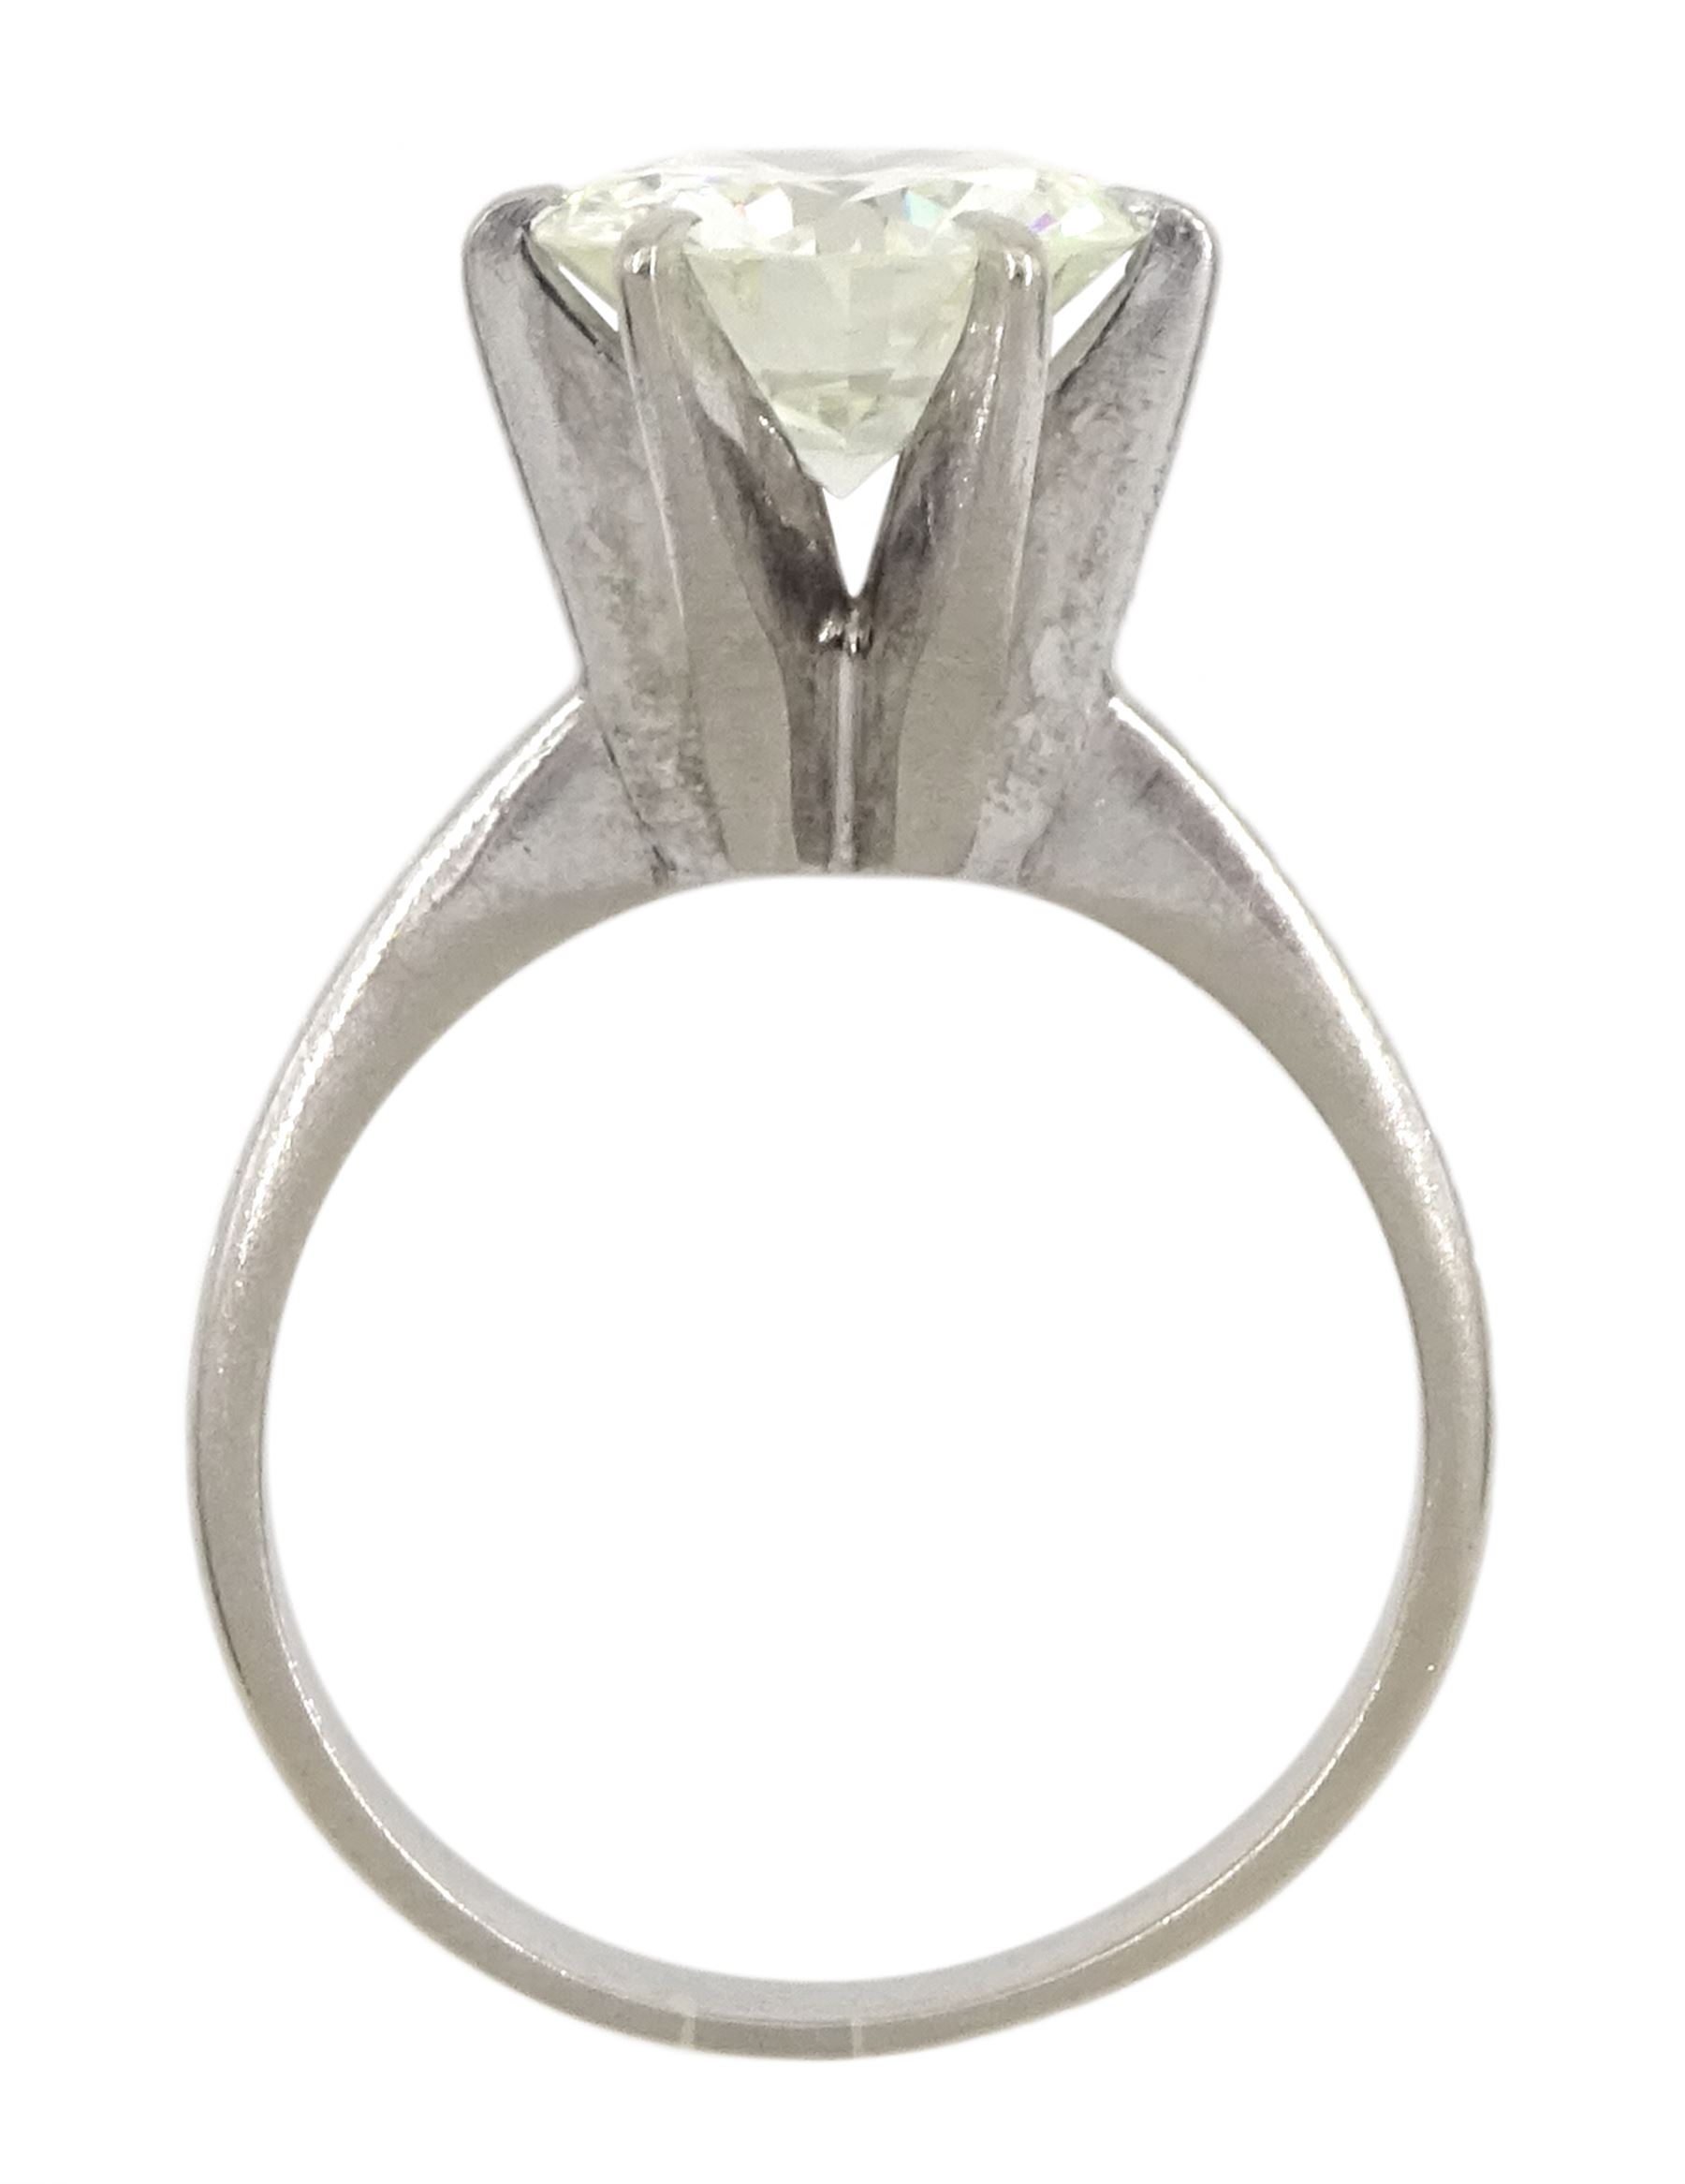 18ct white gold single stone diamond ring - Image 6 of 6